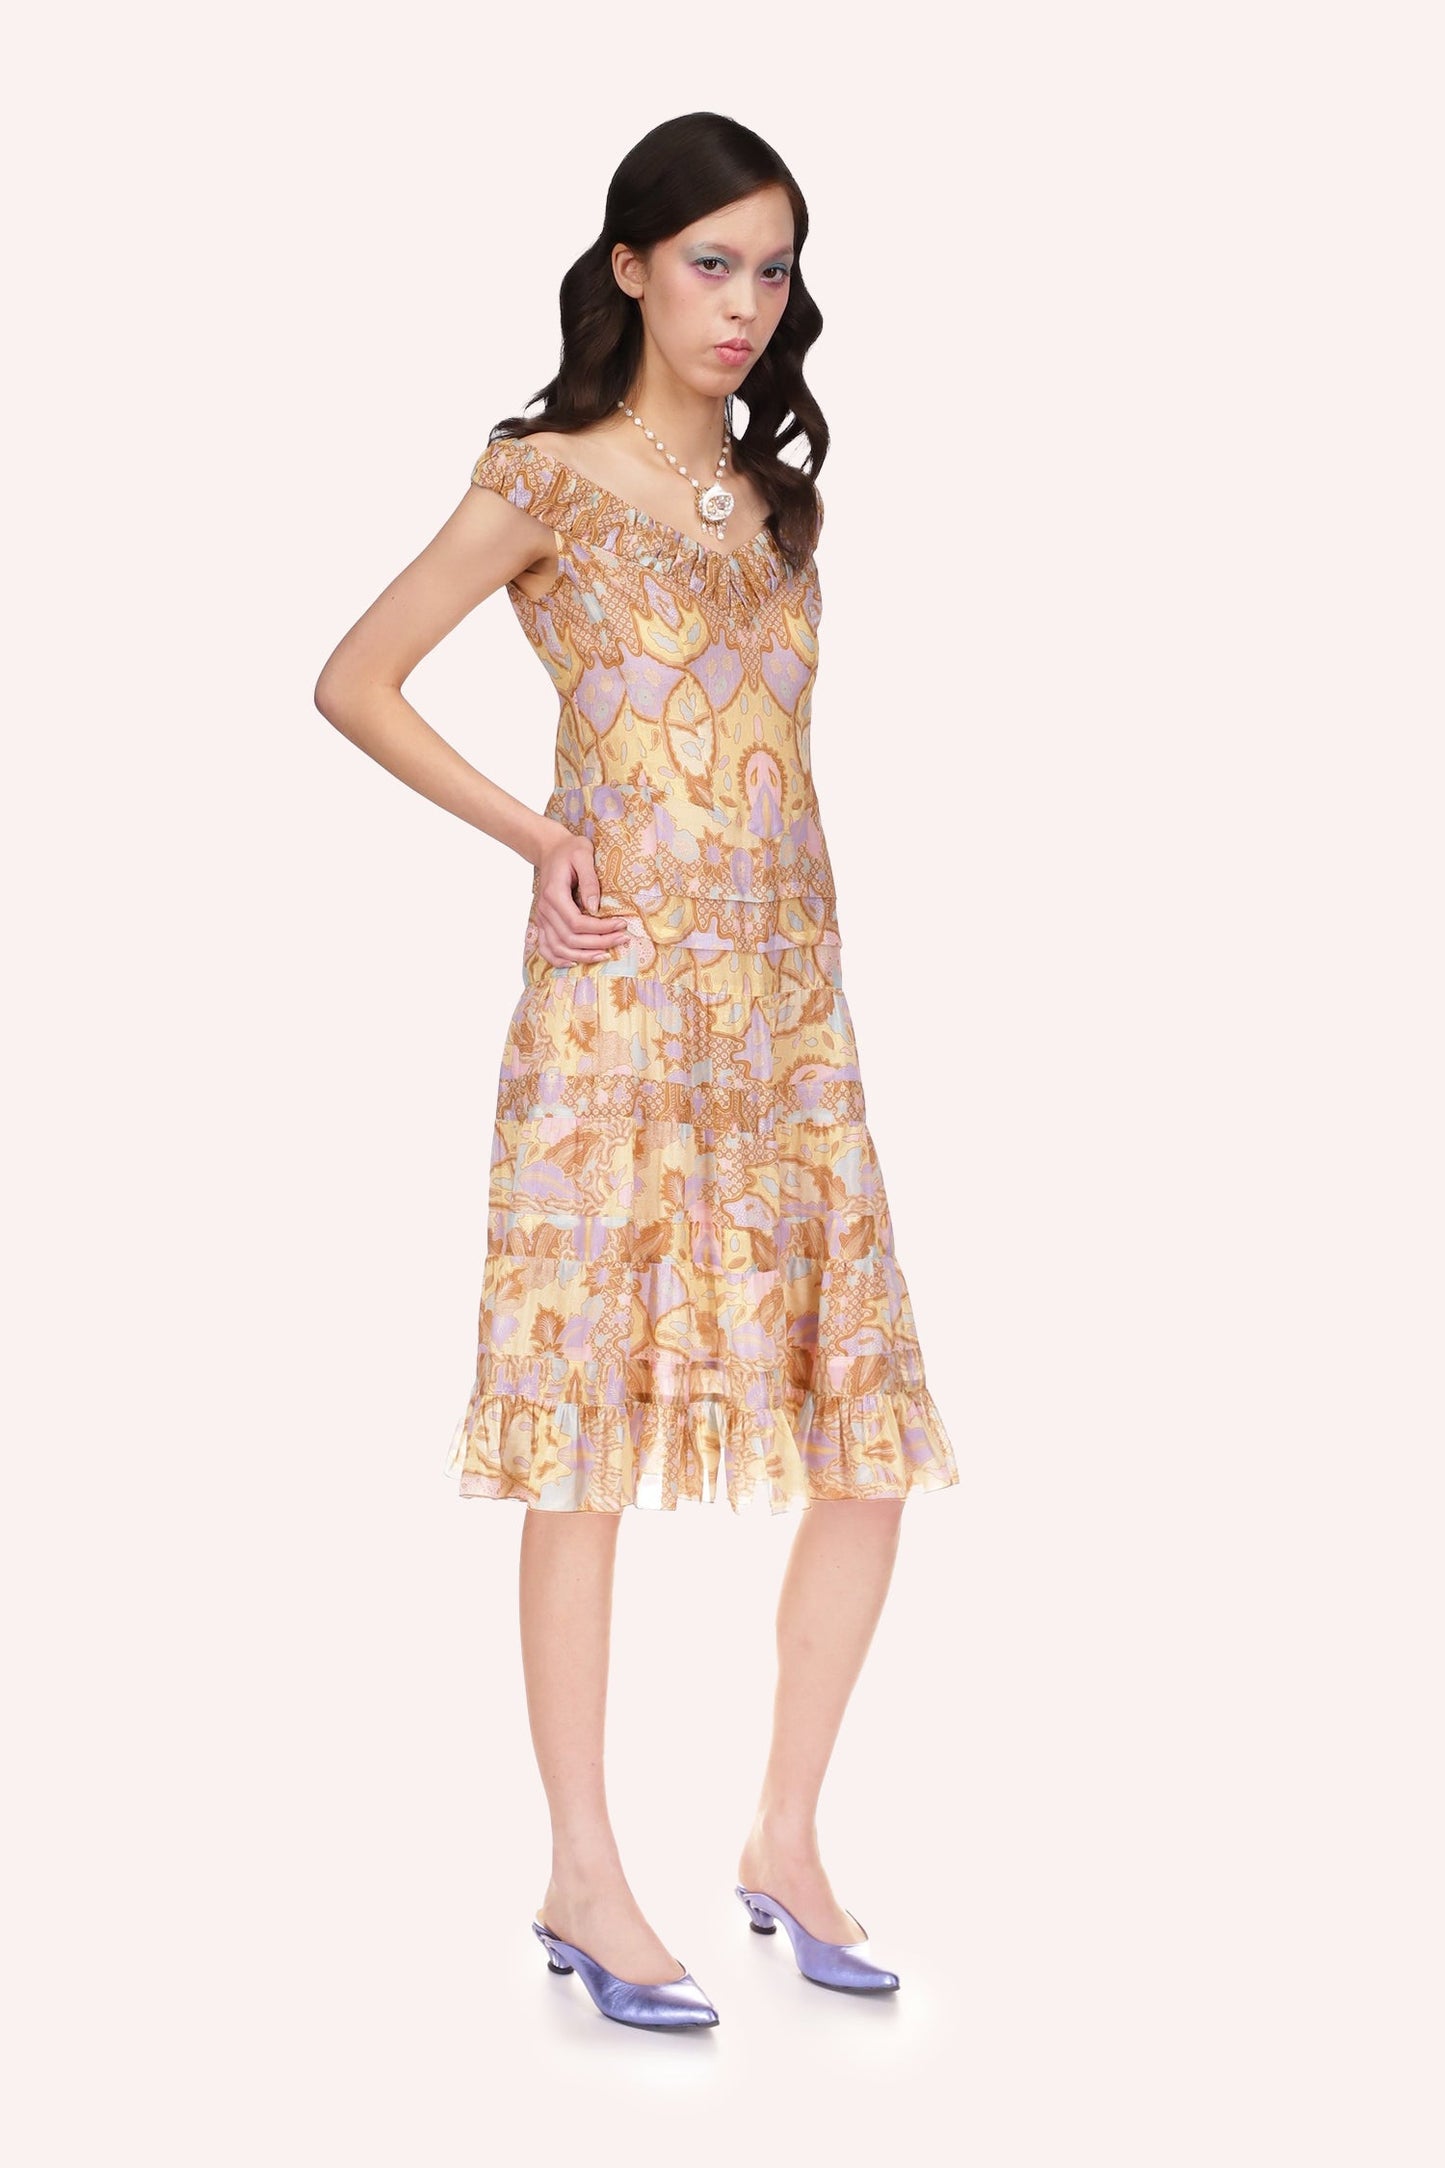 Batik Cotton Dress, sleeveless, under knee long, beige floral design